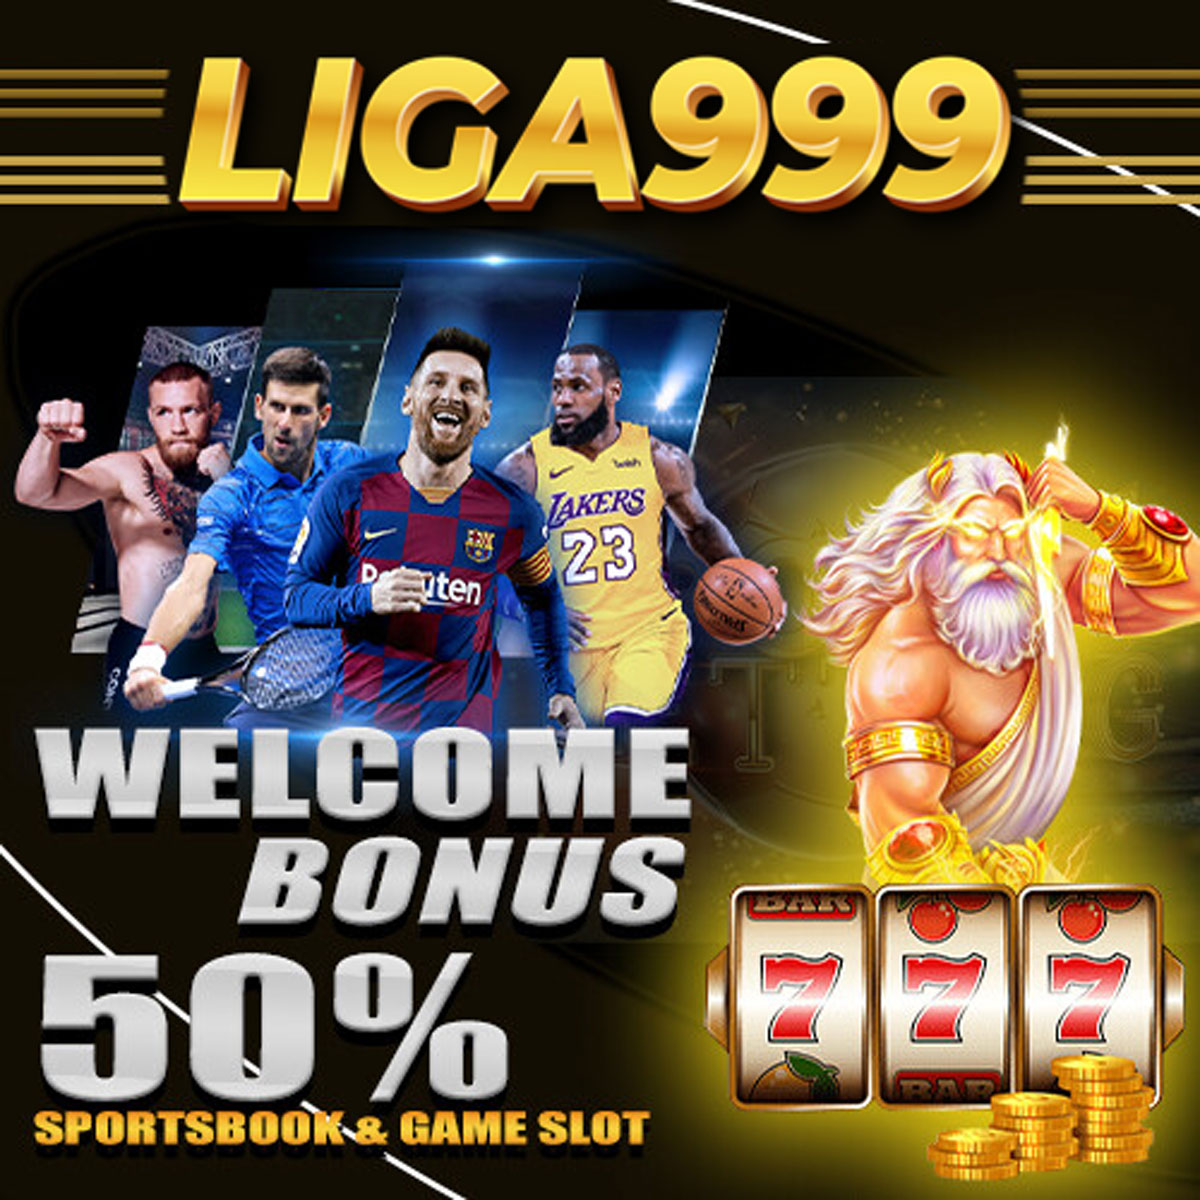 LIGA999 welcome bonus 50% slot & sportsbook